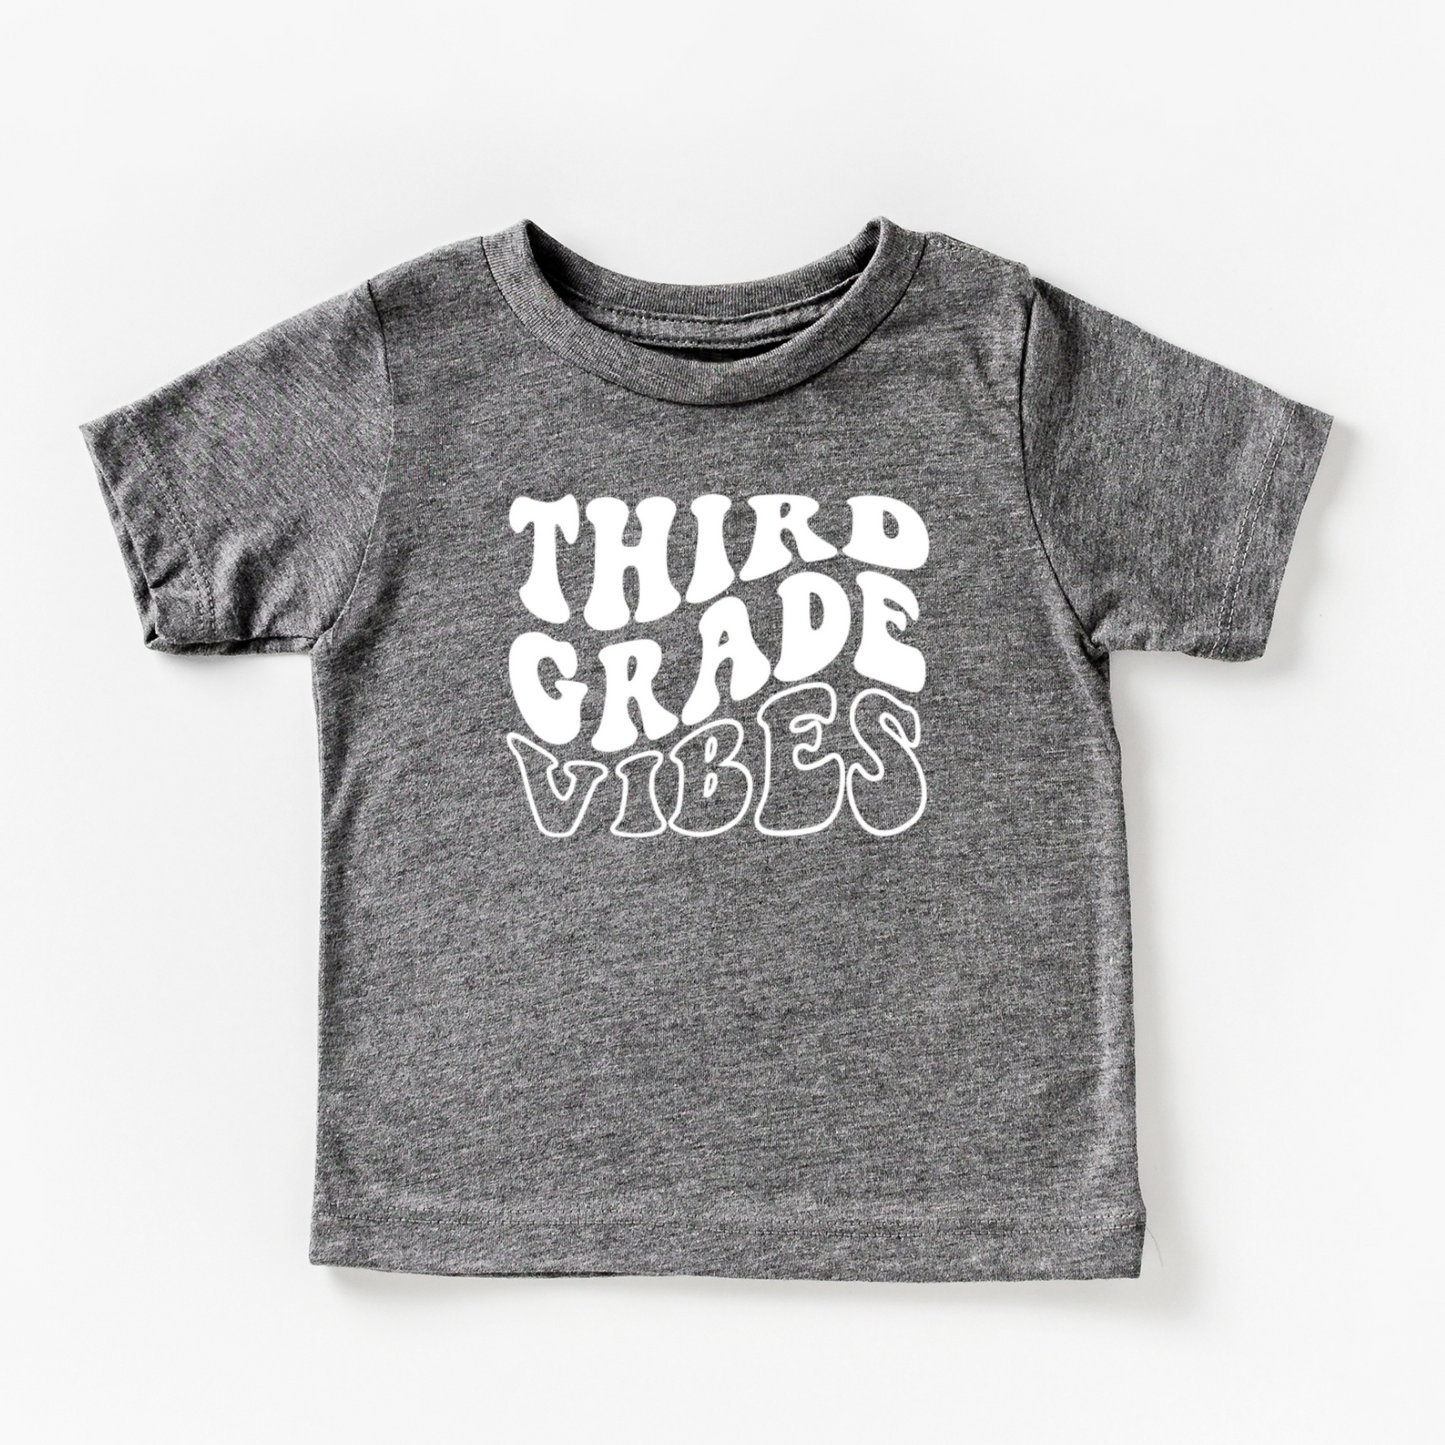 Third Grade Vibes | Short Sleeve Youth Tee